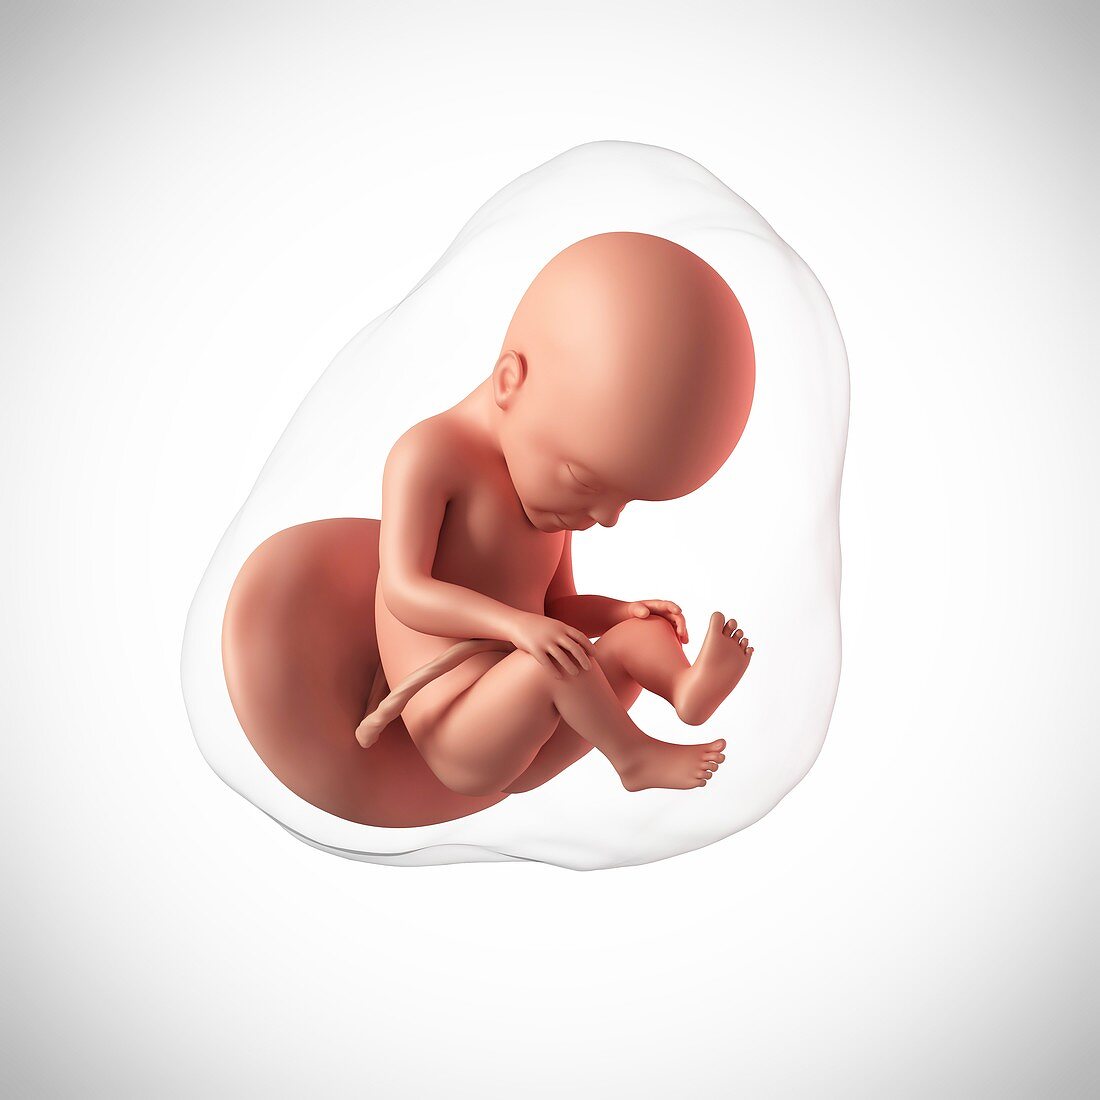 Human fetus age 27 weeks